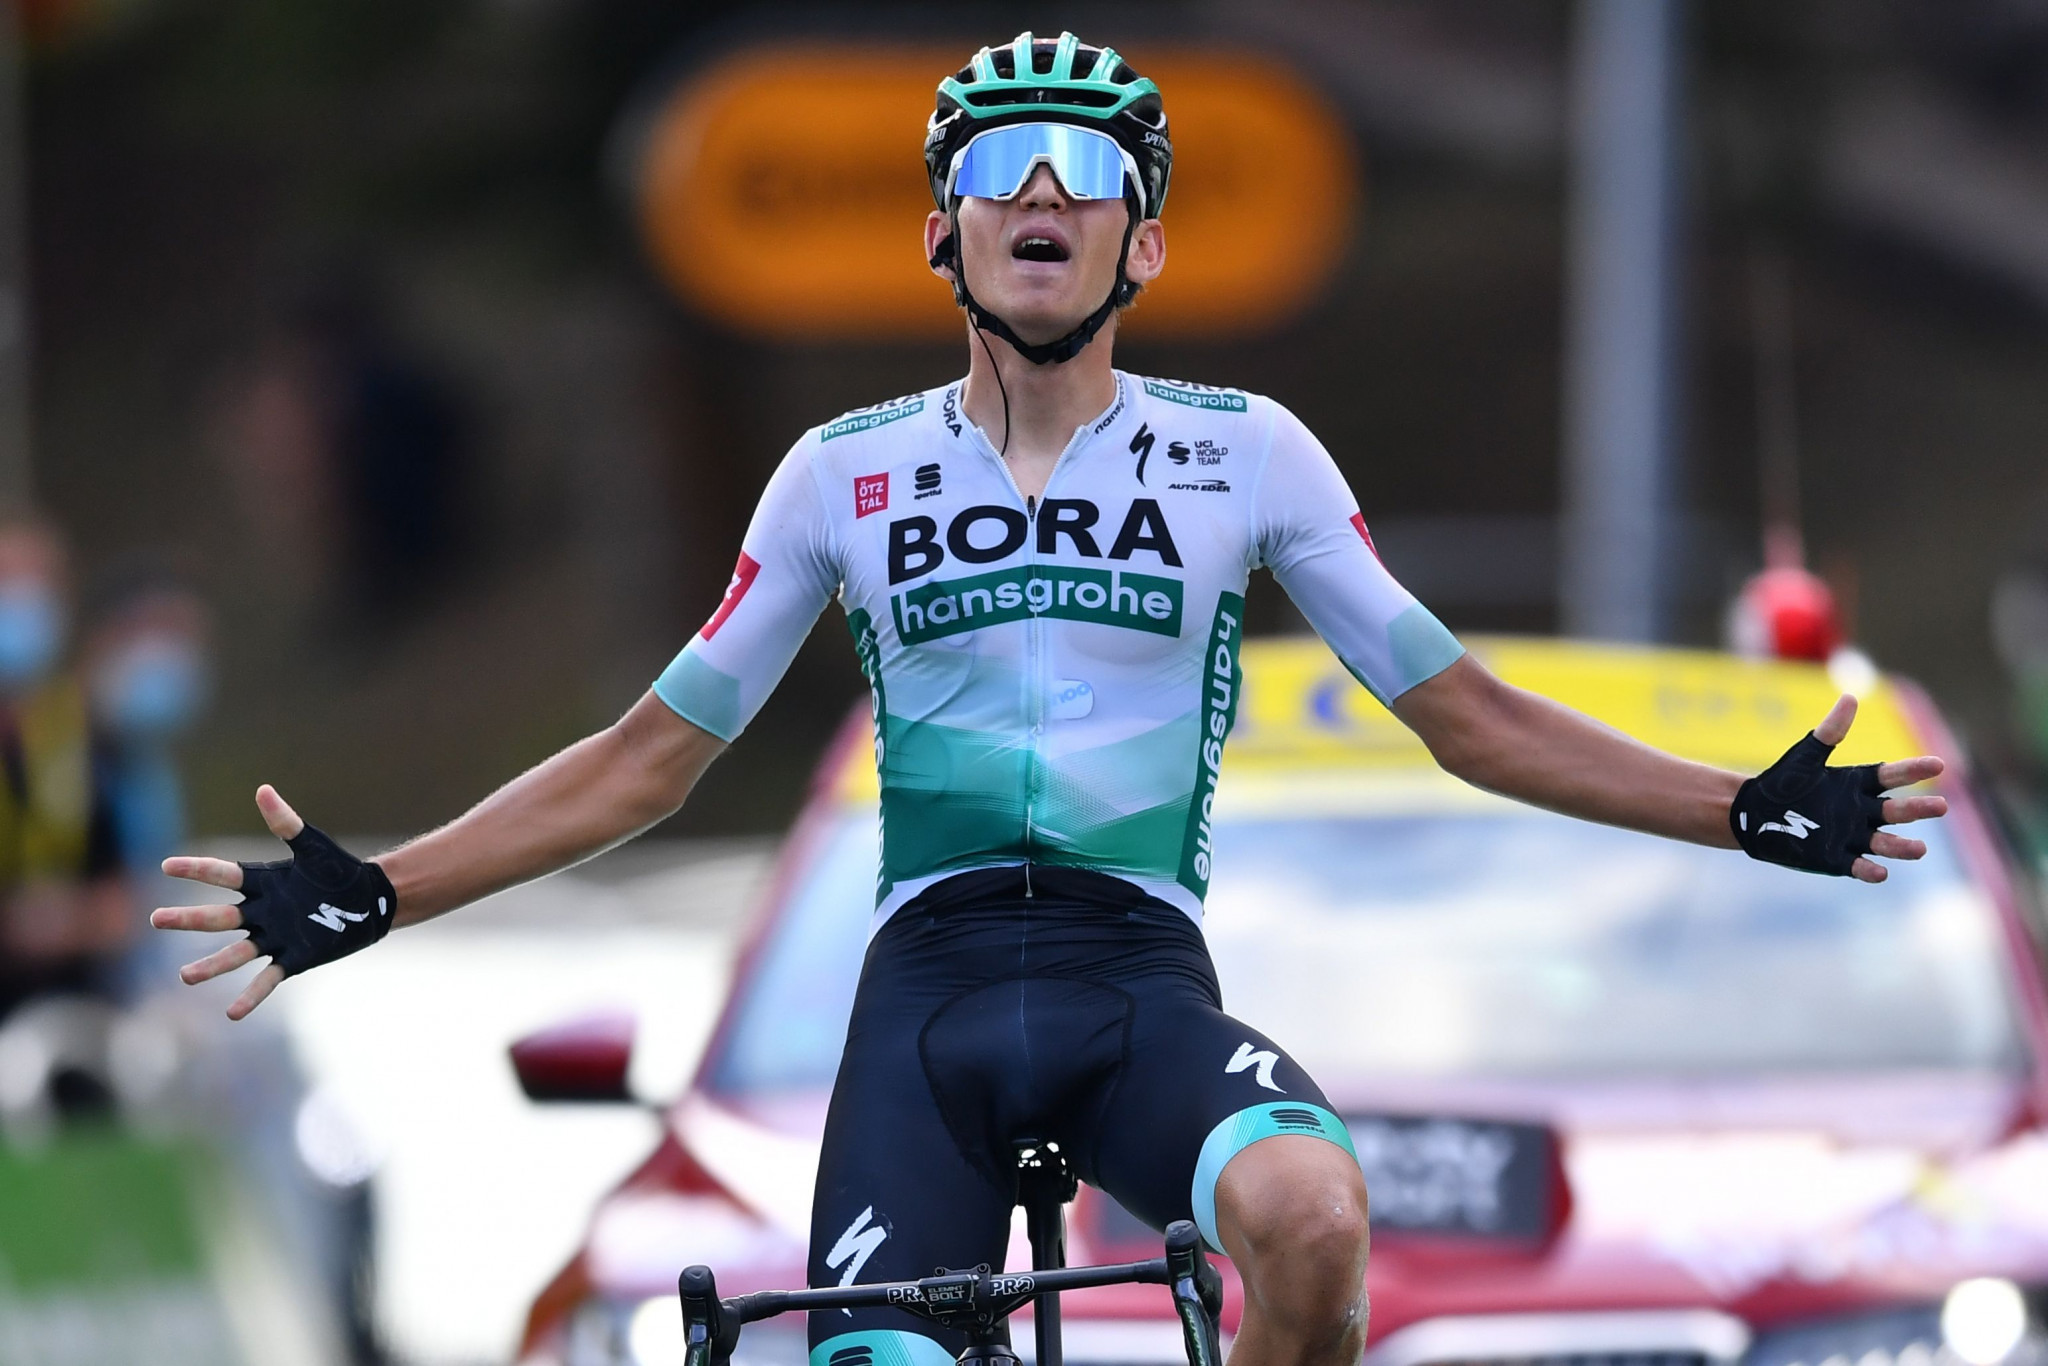 Kämna victorious at Tour de France on mountainous stage 16